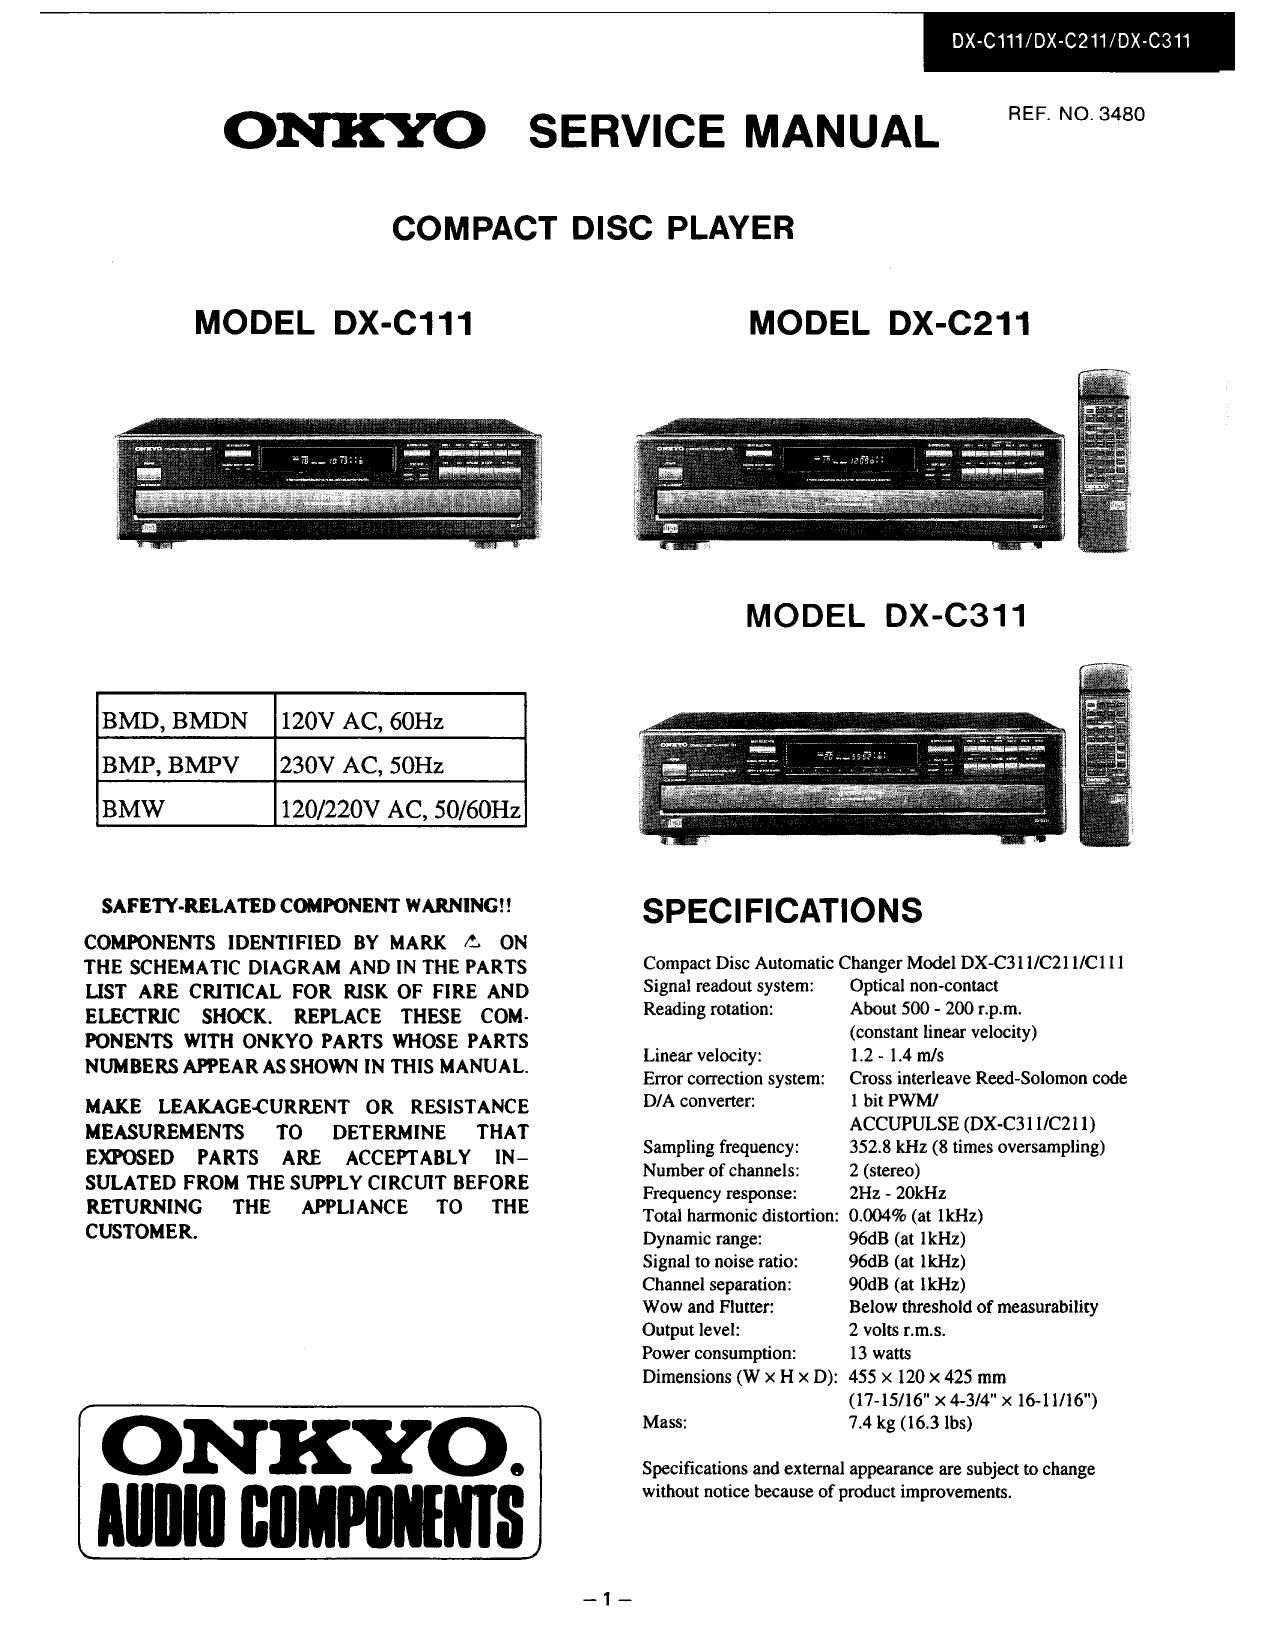 Onkyo DXC 311 Service Manual